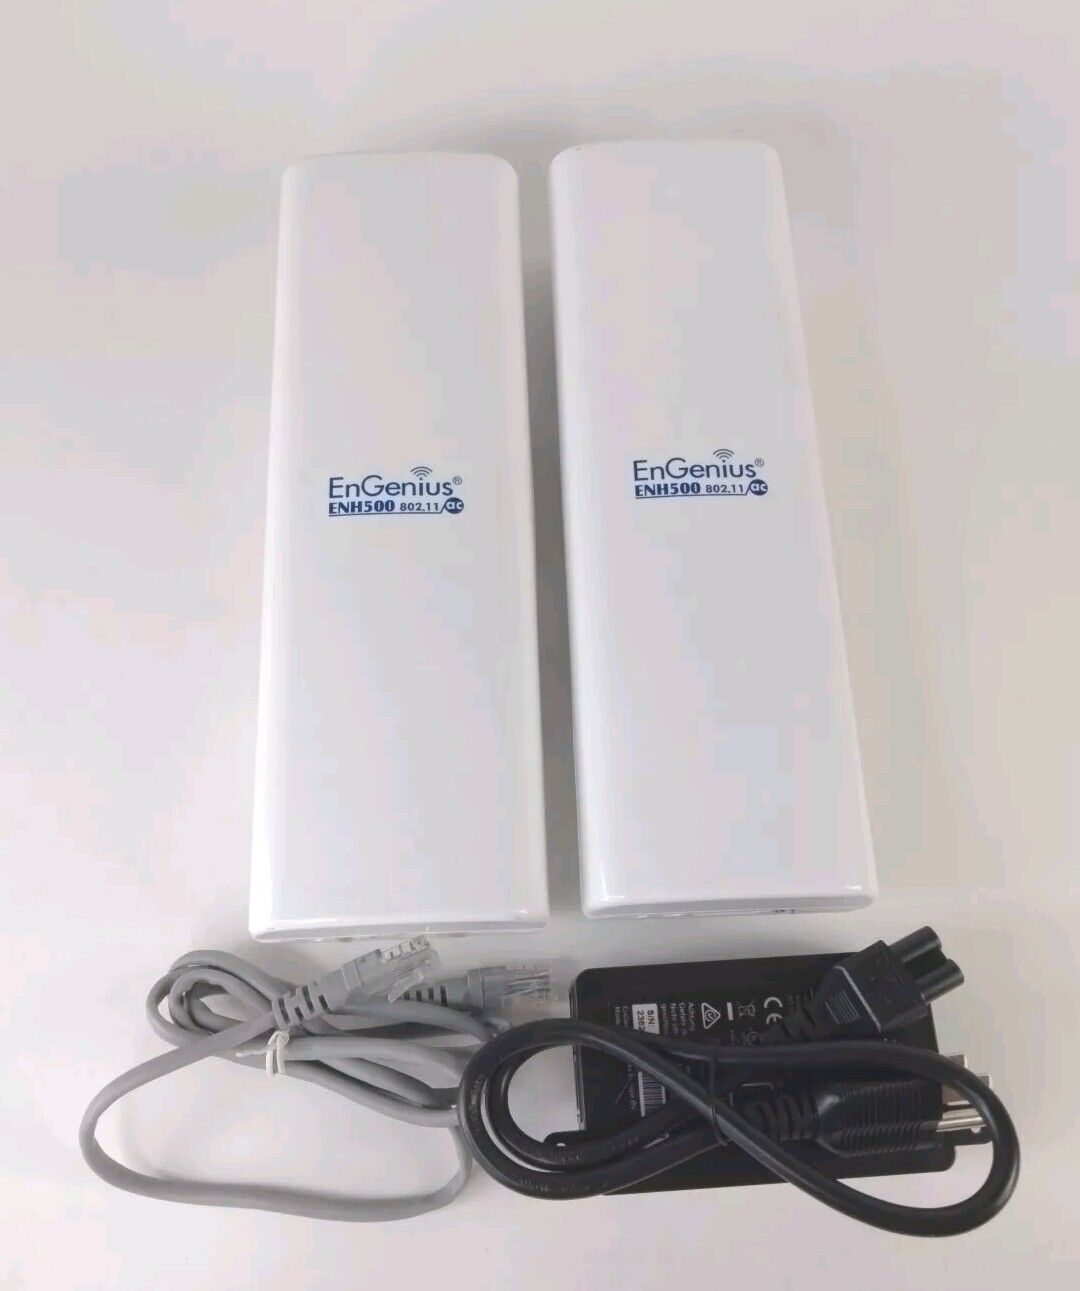 EnGenius Enh500v3 Kit EnJet AC867 Outdoor 5GHz CPE Wireless Bridge Kit (2 Pack)